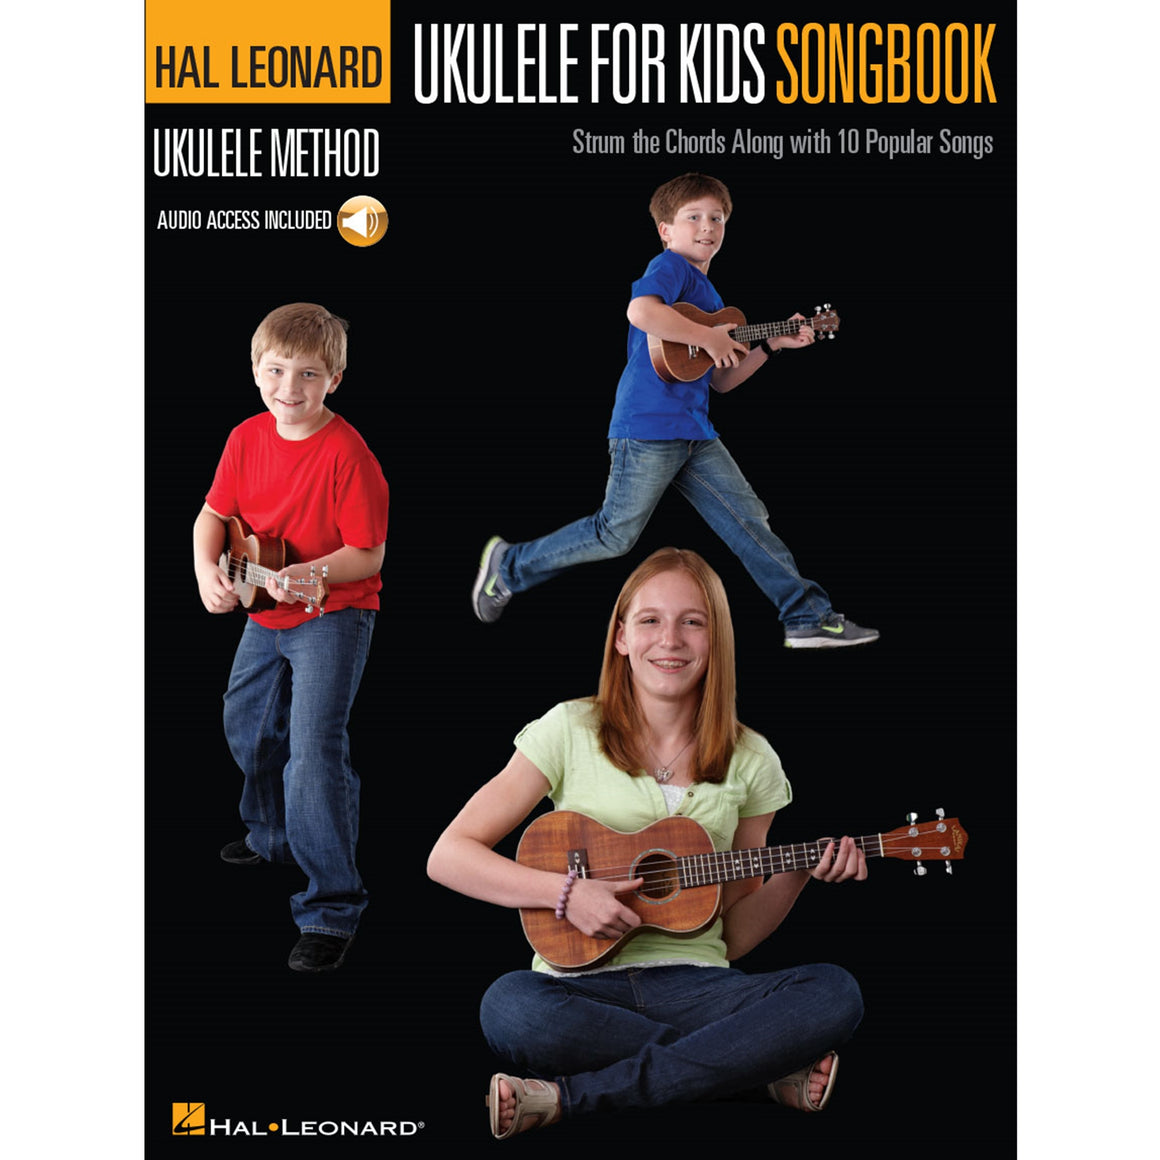 HAL LEONARD 153137 Ukulele for Kids Songbook